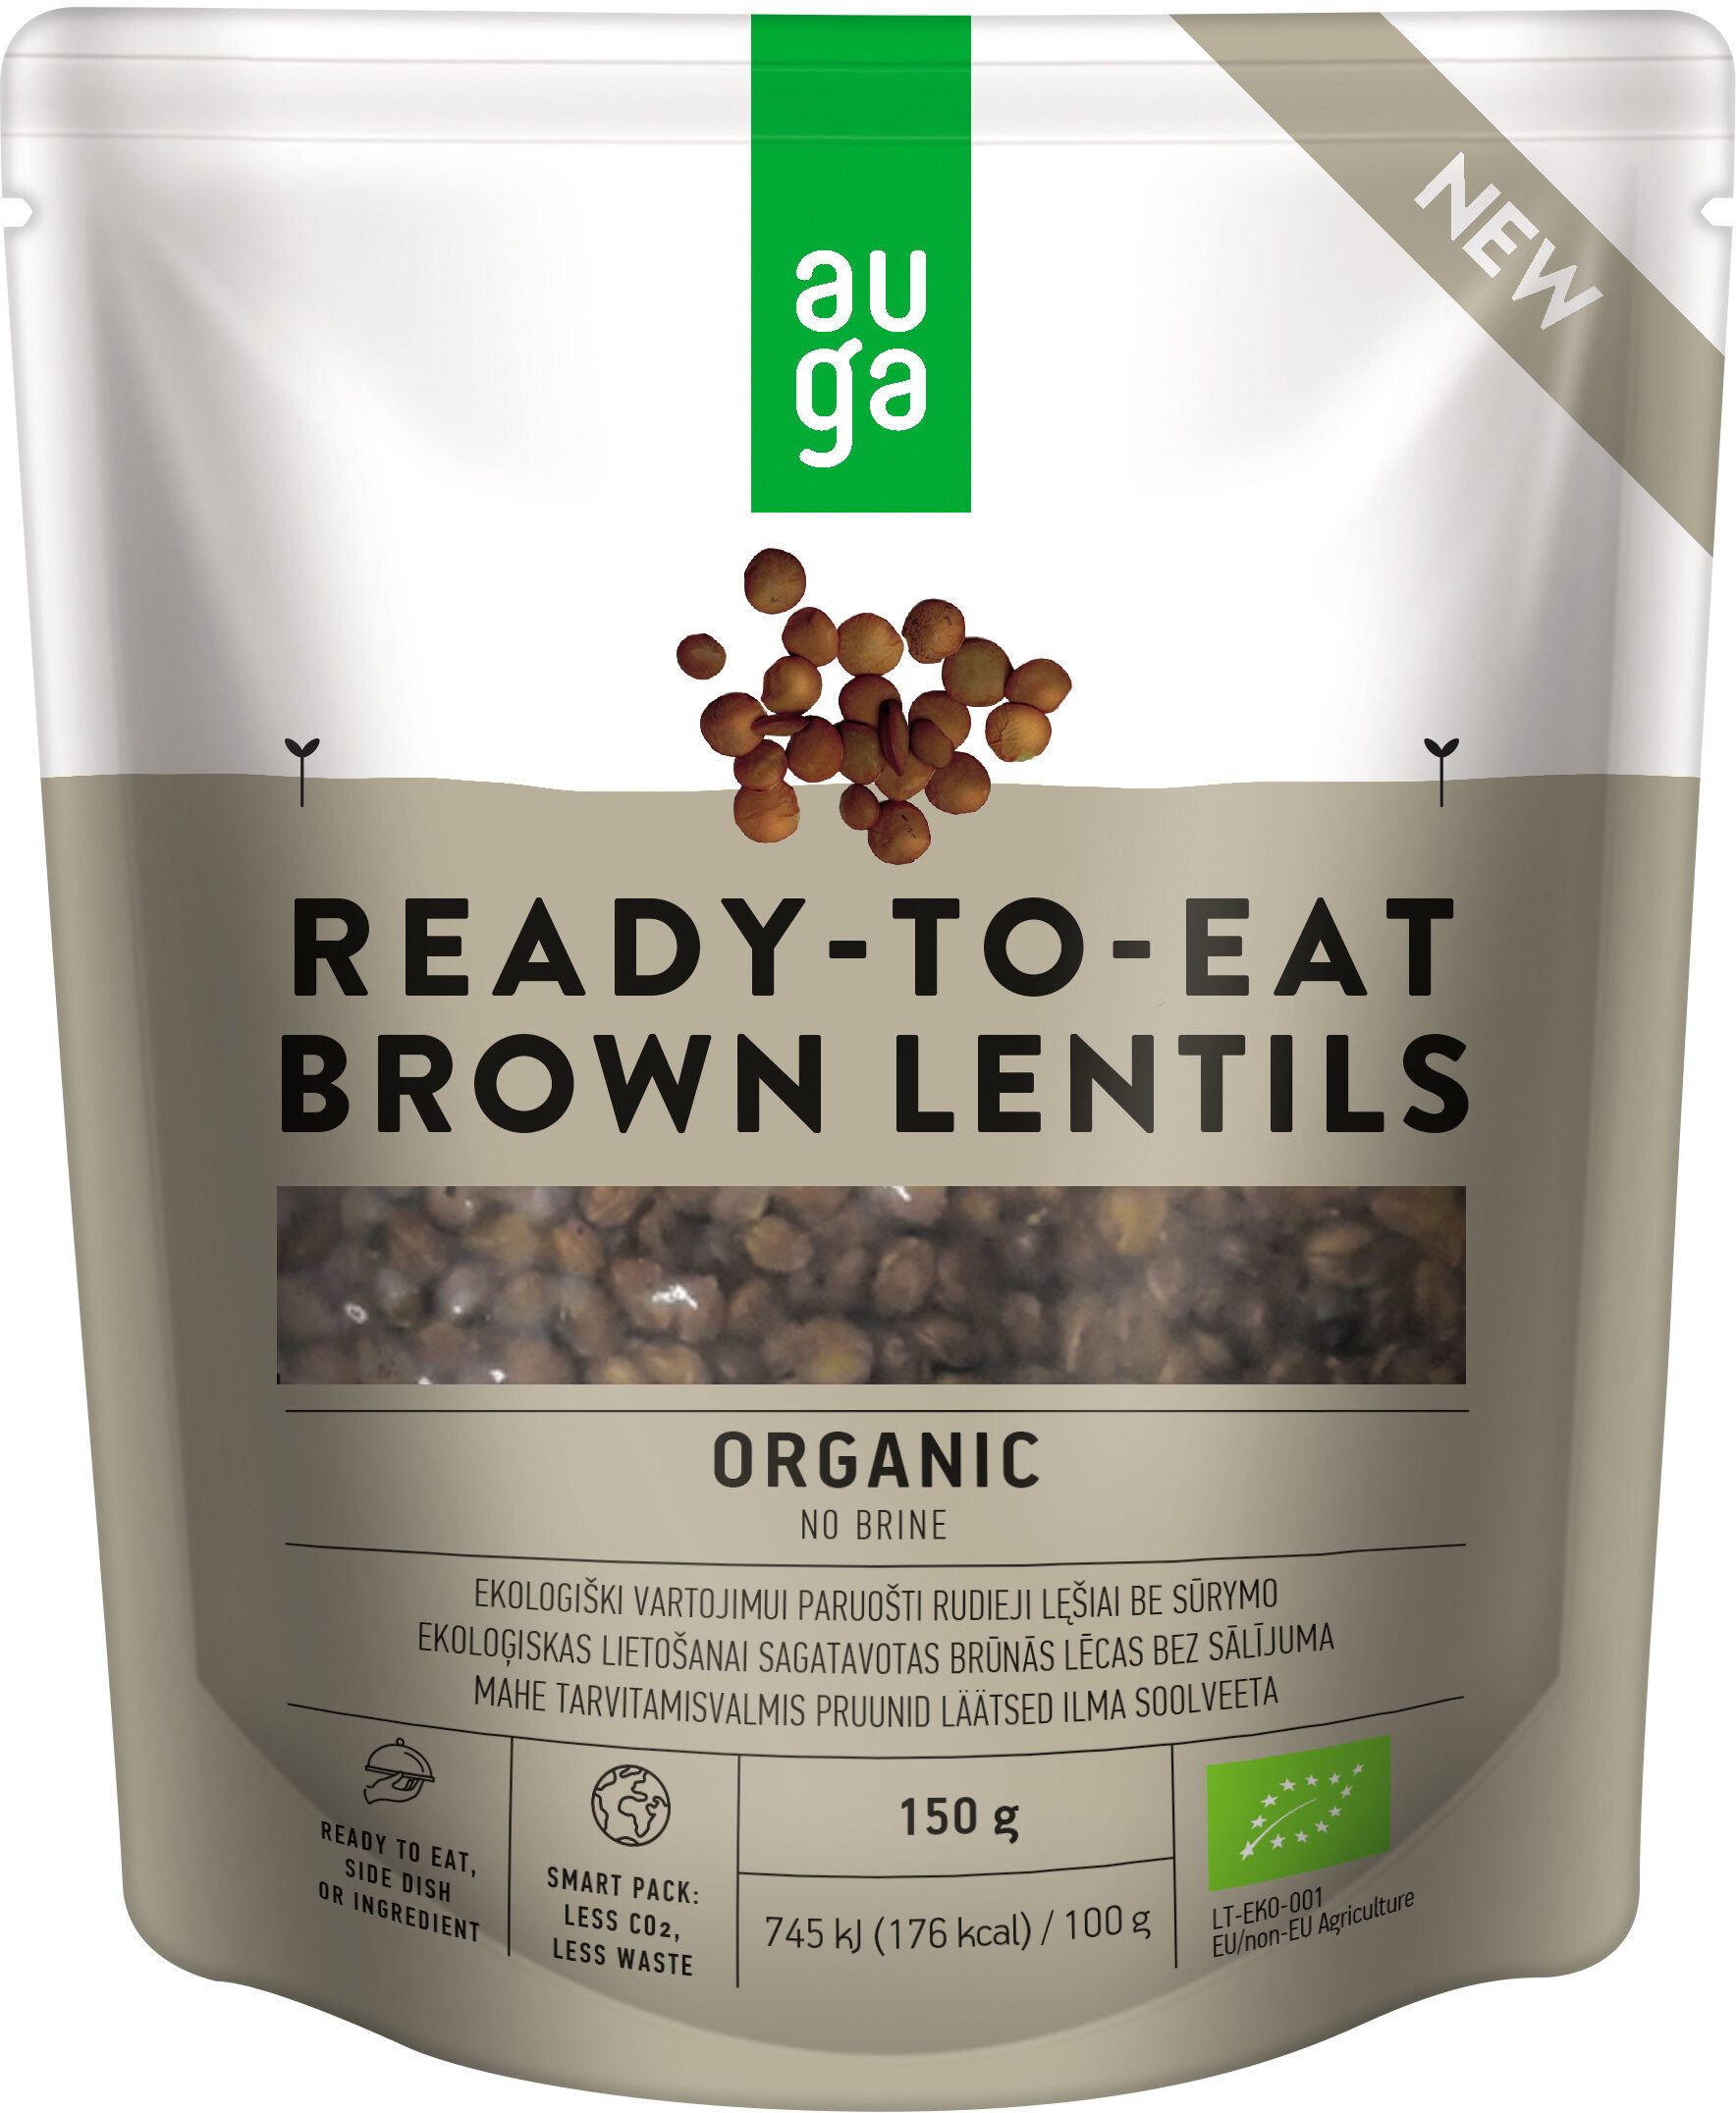 Ready-To-Eat Brown Lentils - Produkt - en